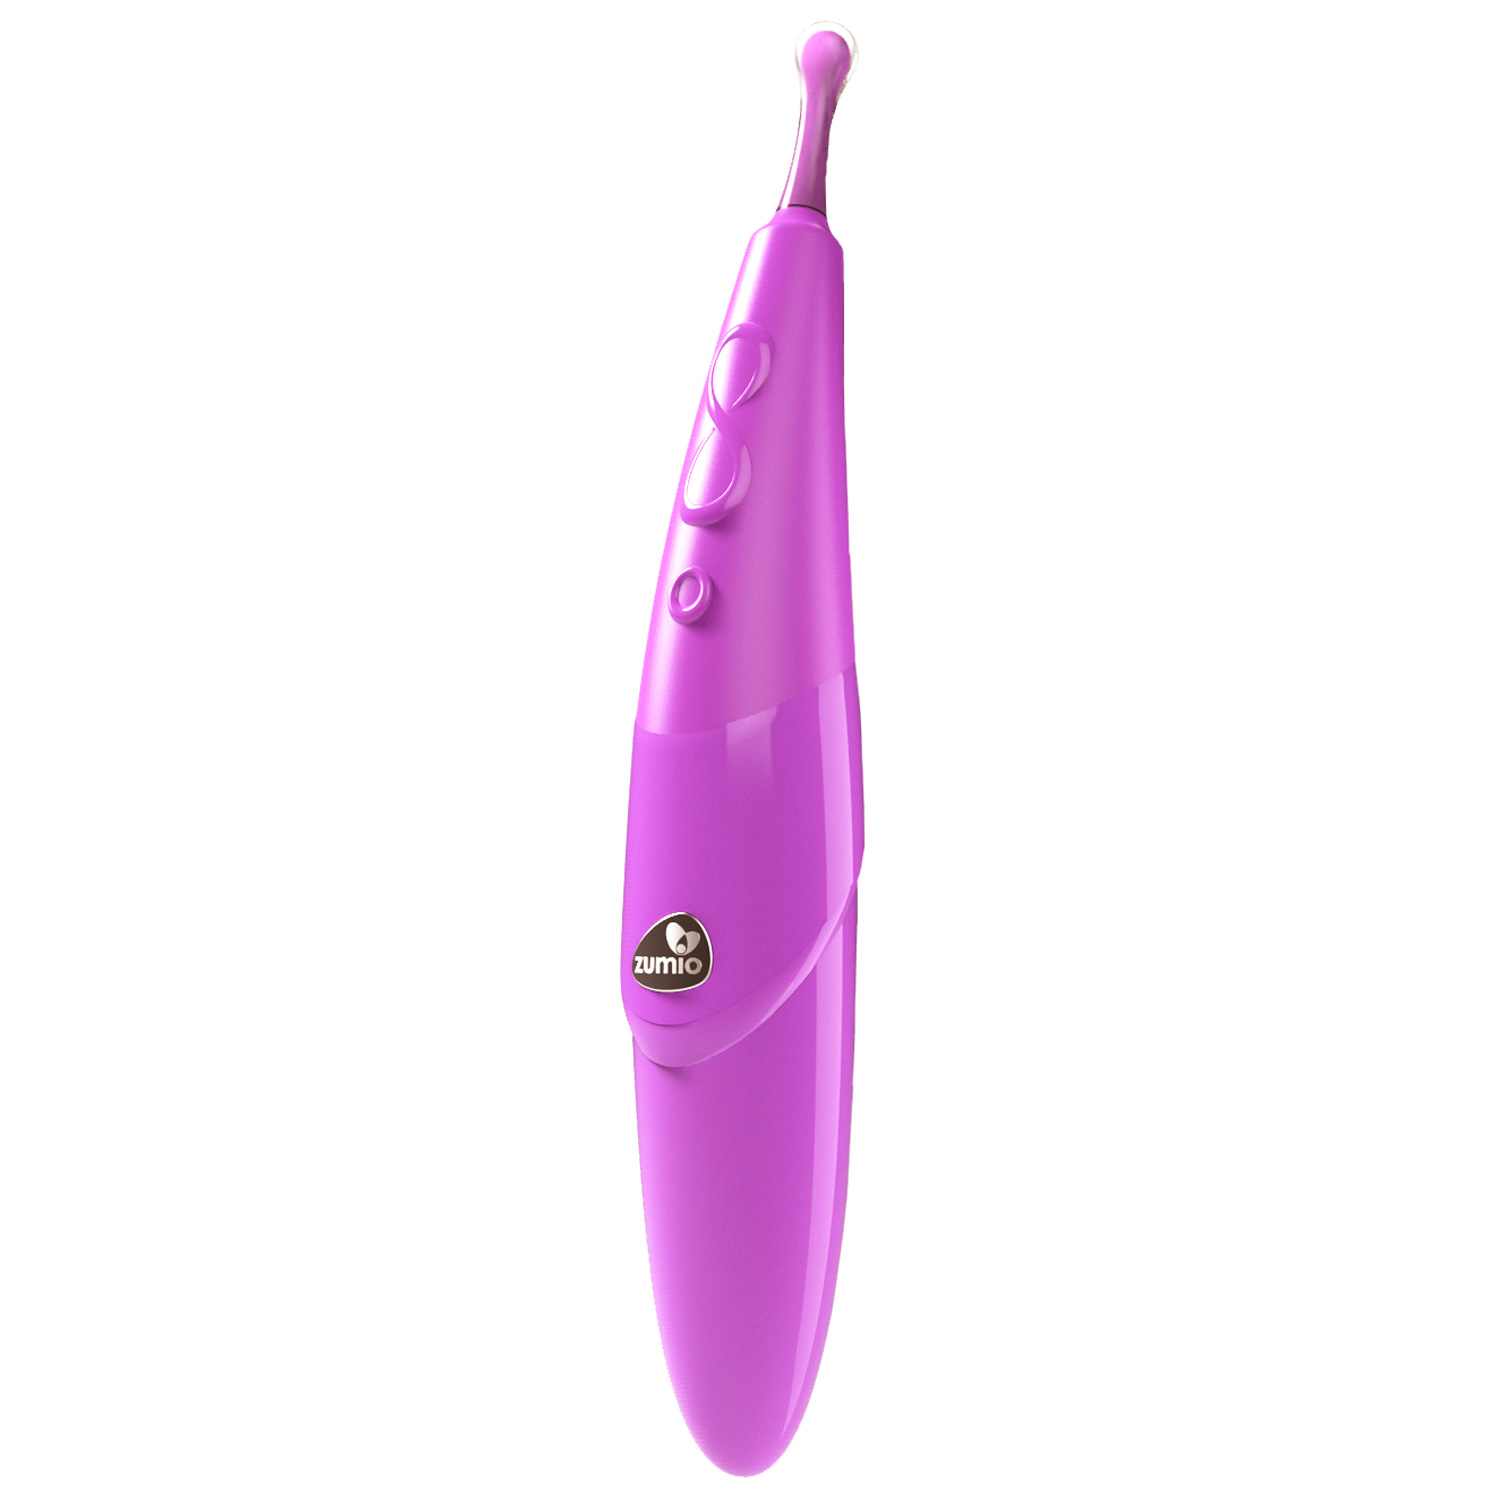 Zumio S Spirotip Klitoris Vibrator - Purple